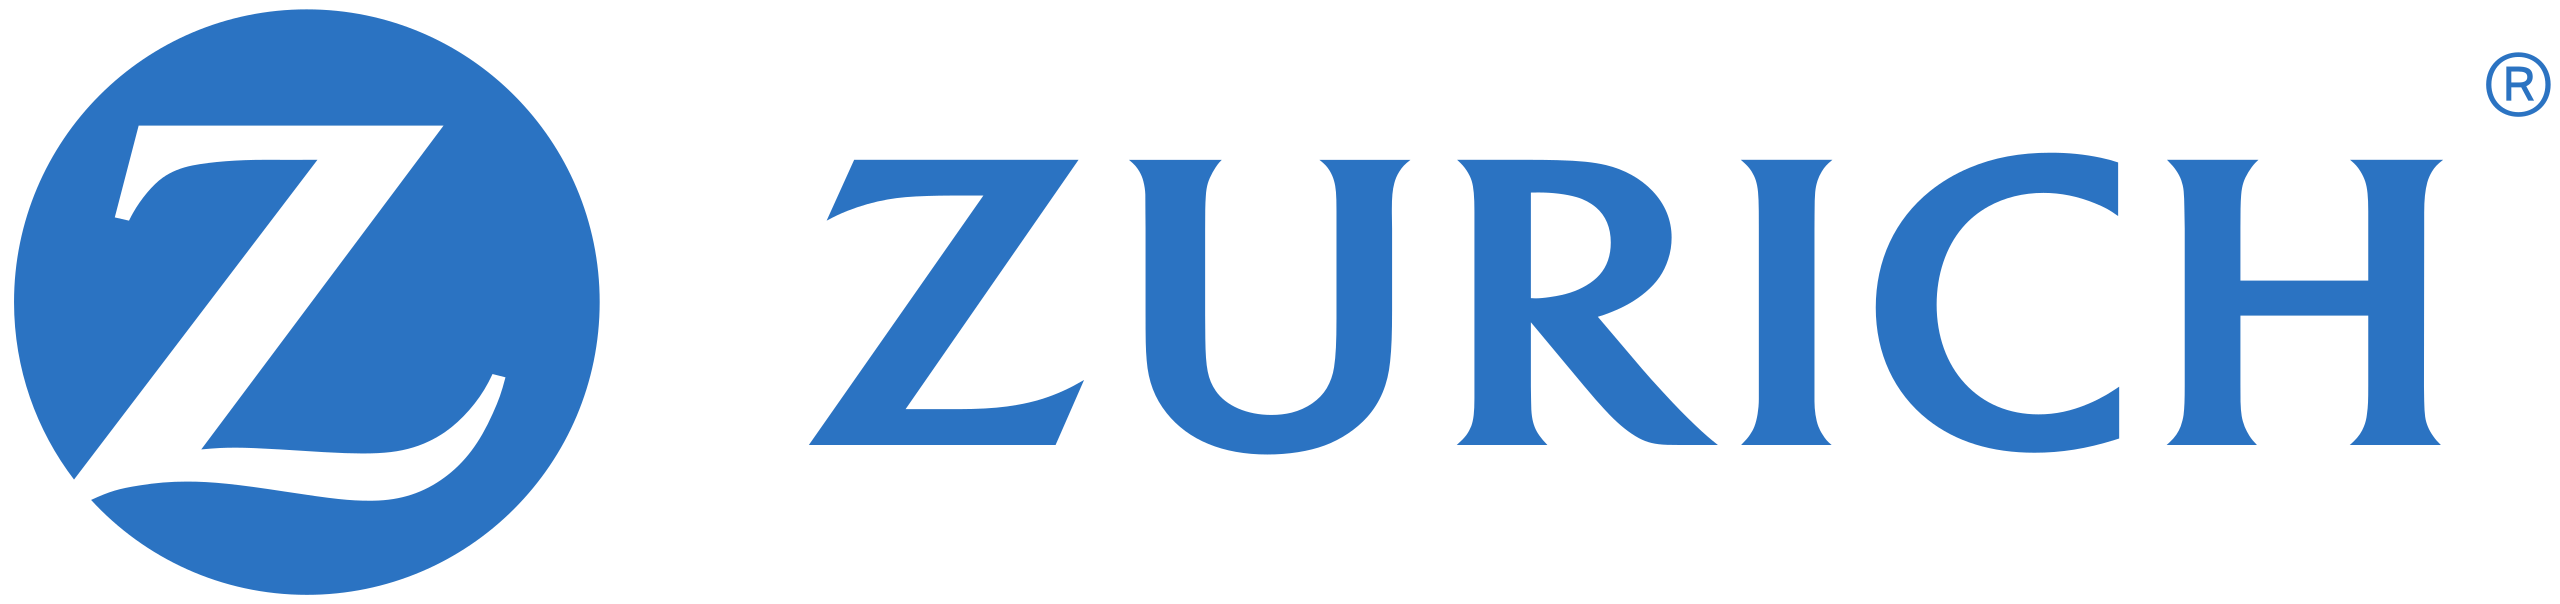 Zurich_Insurance_Group_Logo_Horizontal.svg